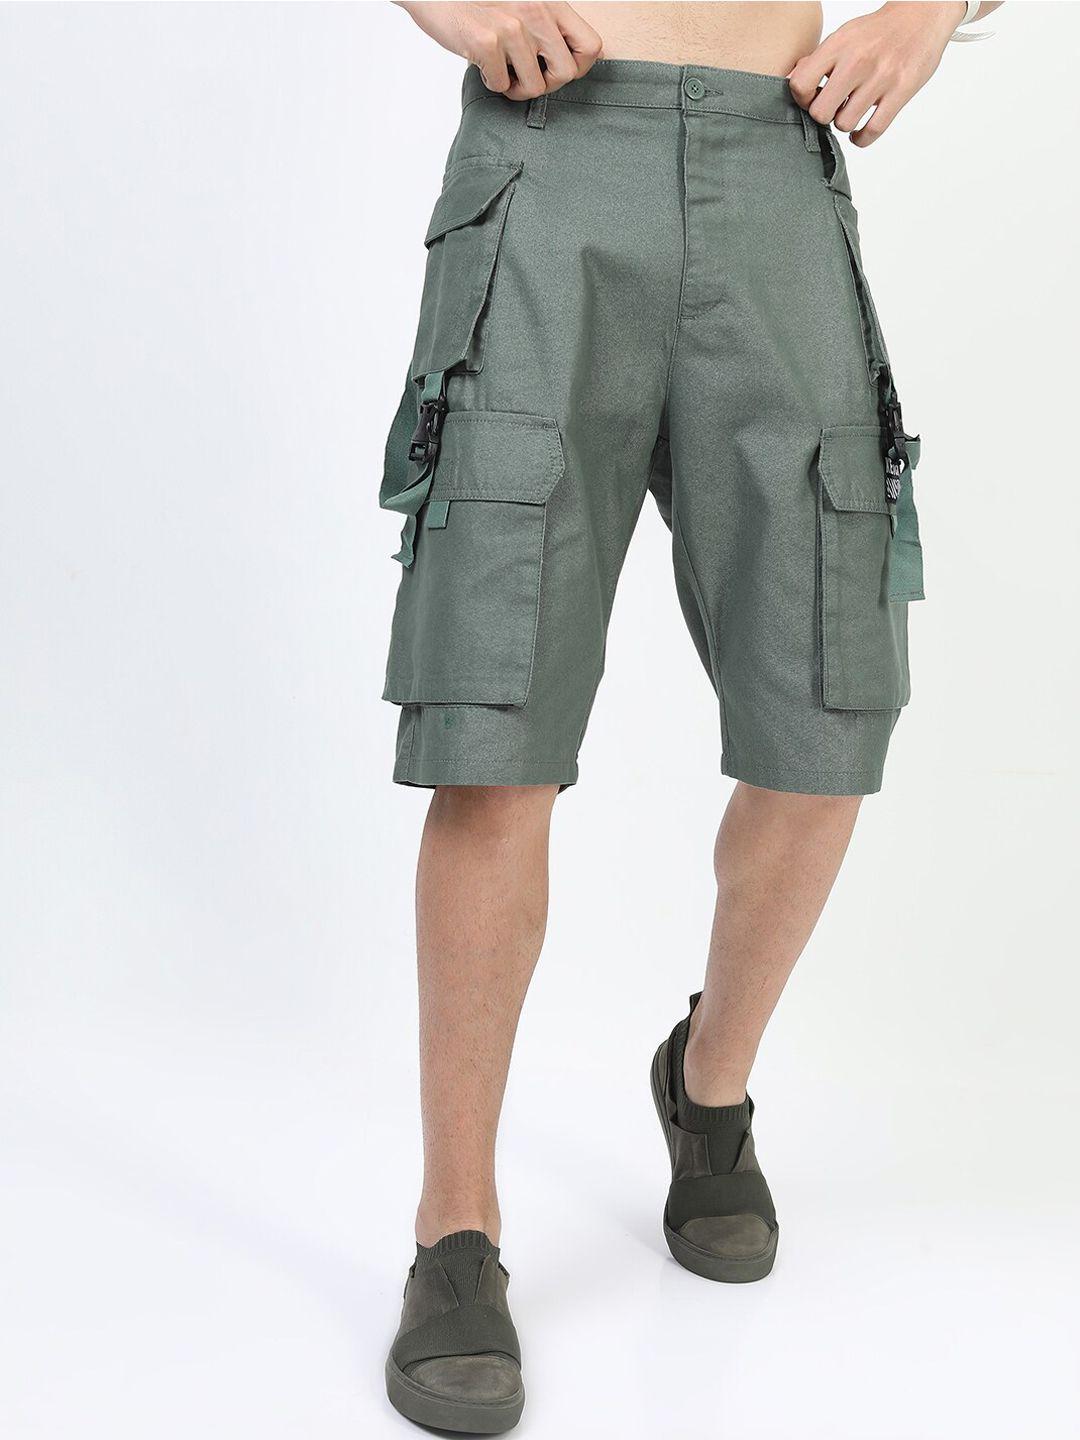 ketch-men-green-shorts